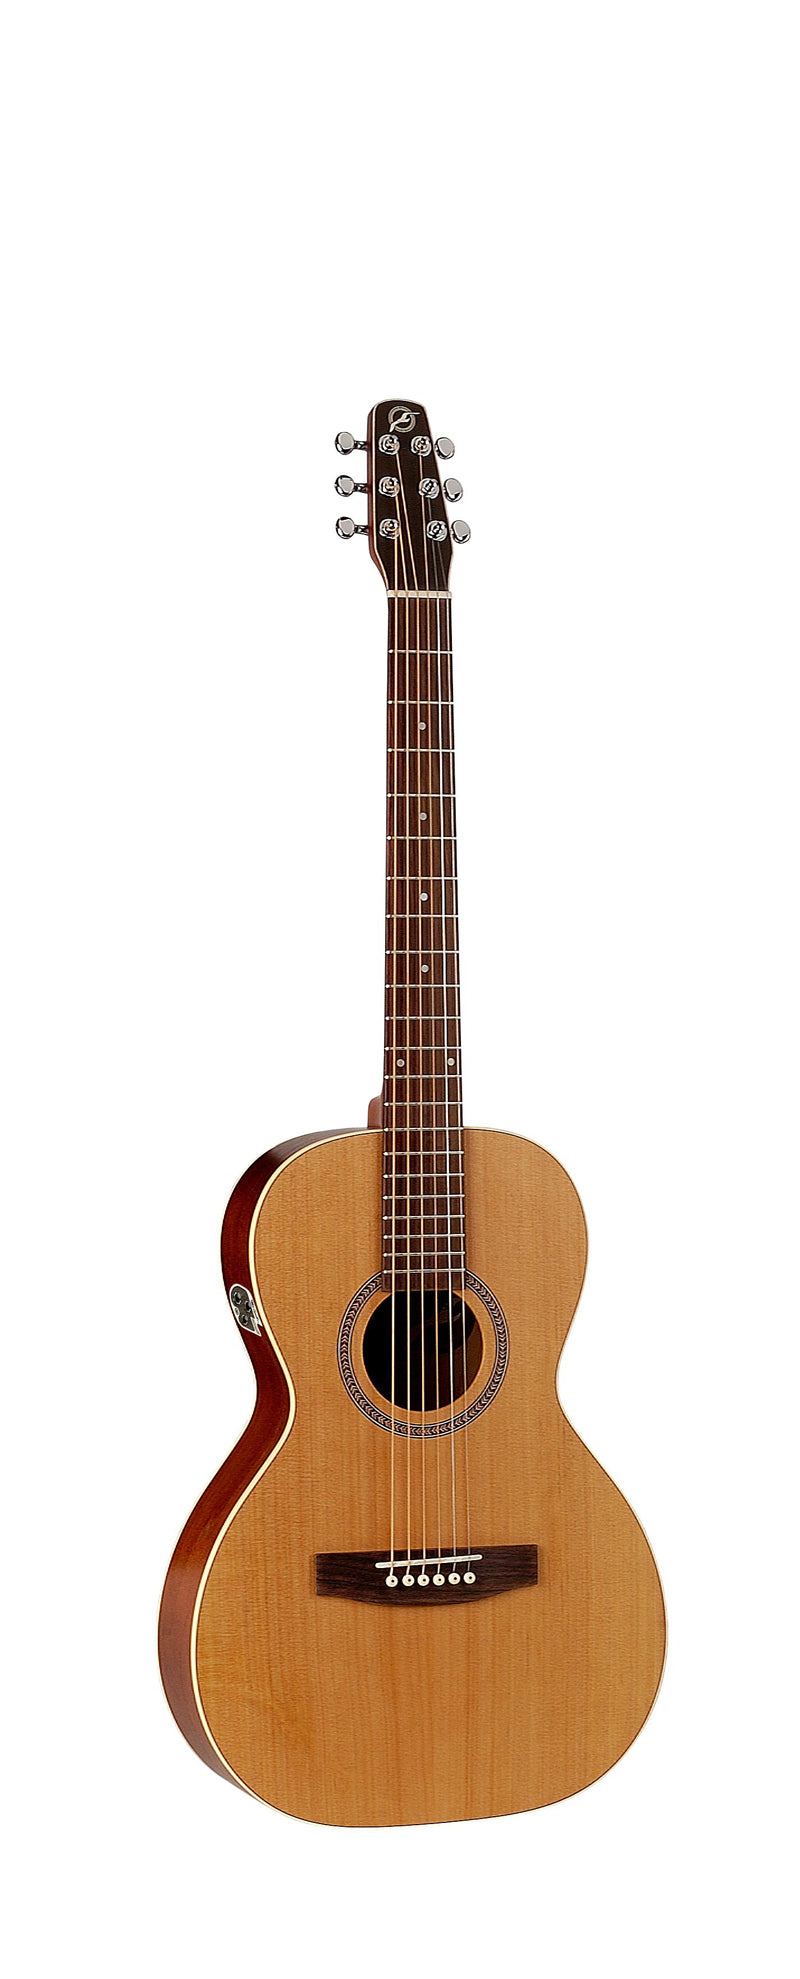 Seagull Coastline Cedar Grand (Compact Body ) w/ QI Electronics Acoustic Guitar (029259)